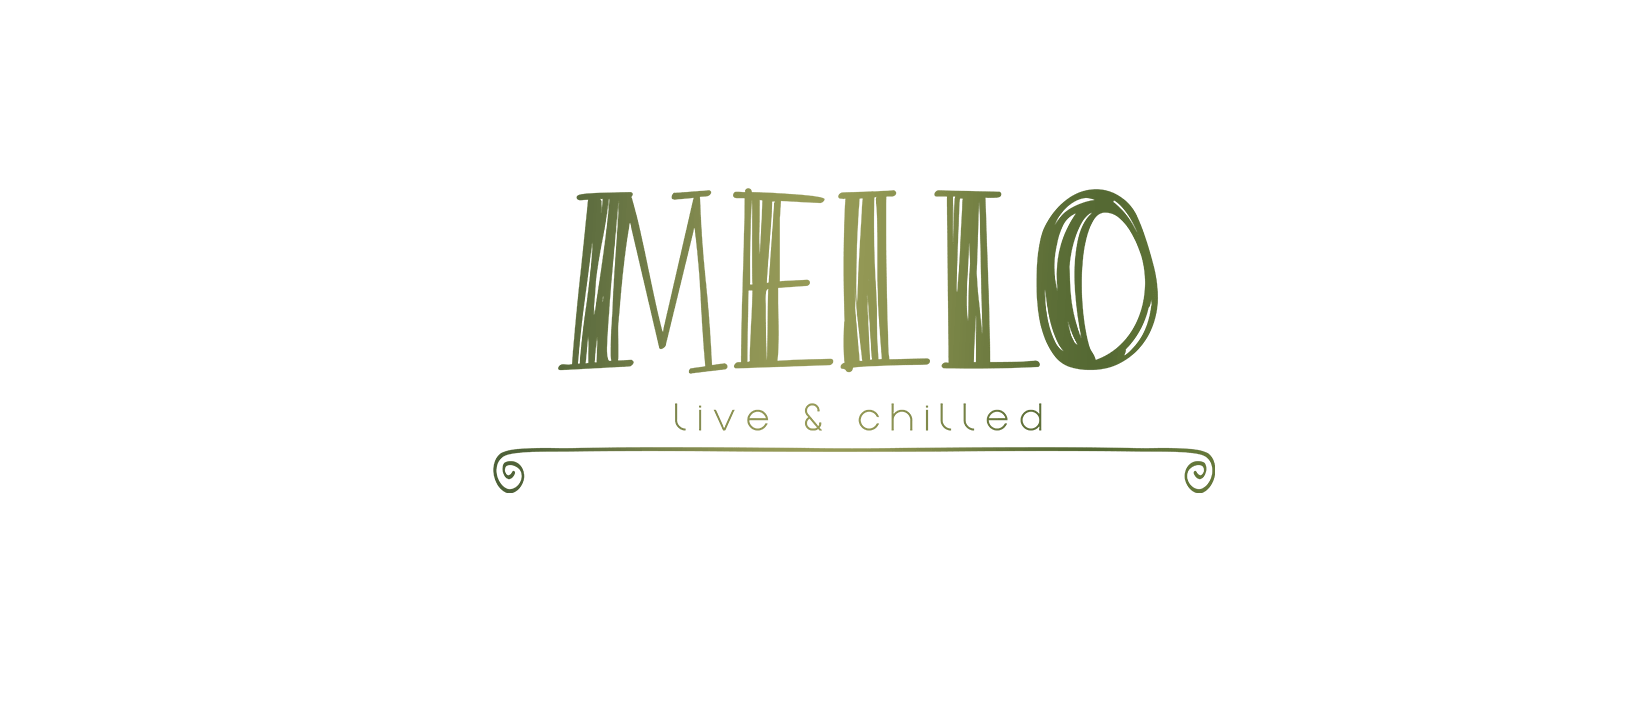 Mello Logo - Mello 19 Full Weekend – Teen (13-17yrs) – That's The Tickets